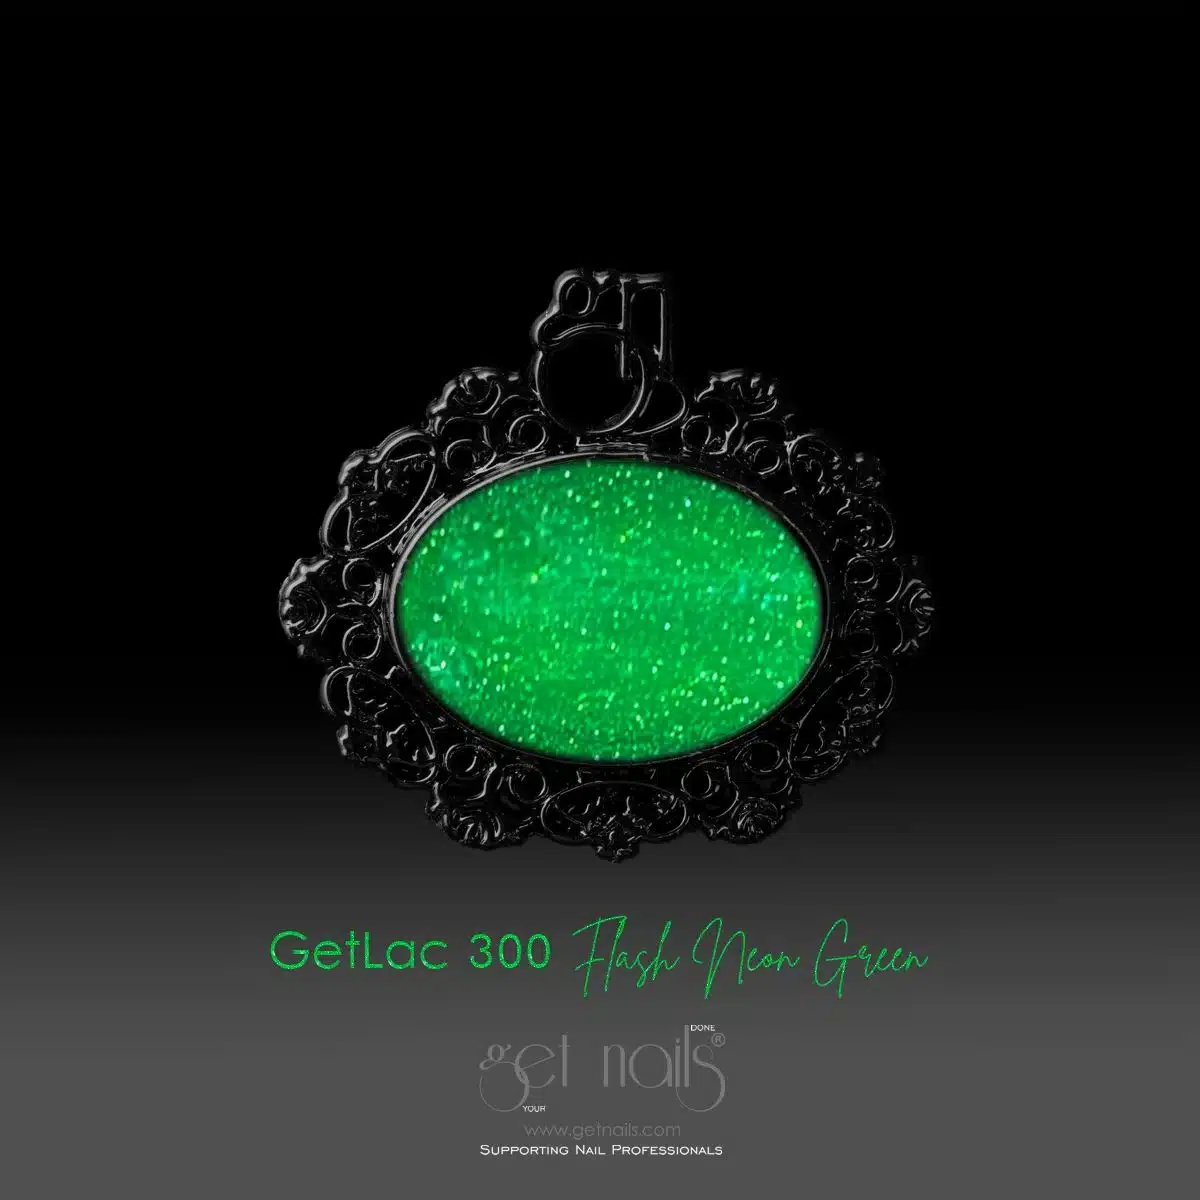 Get Nails Austria - GetLac 300 Flash Neon Green 15g